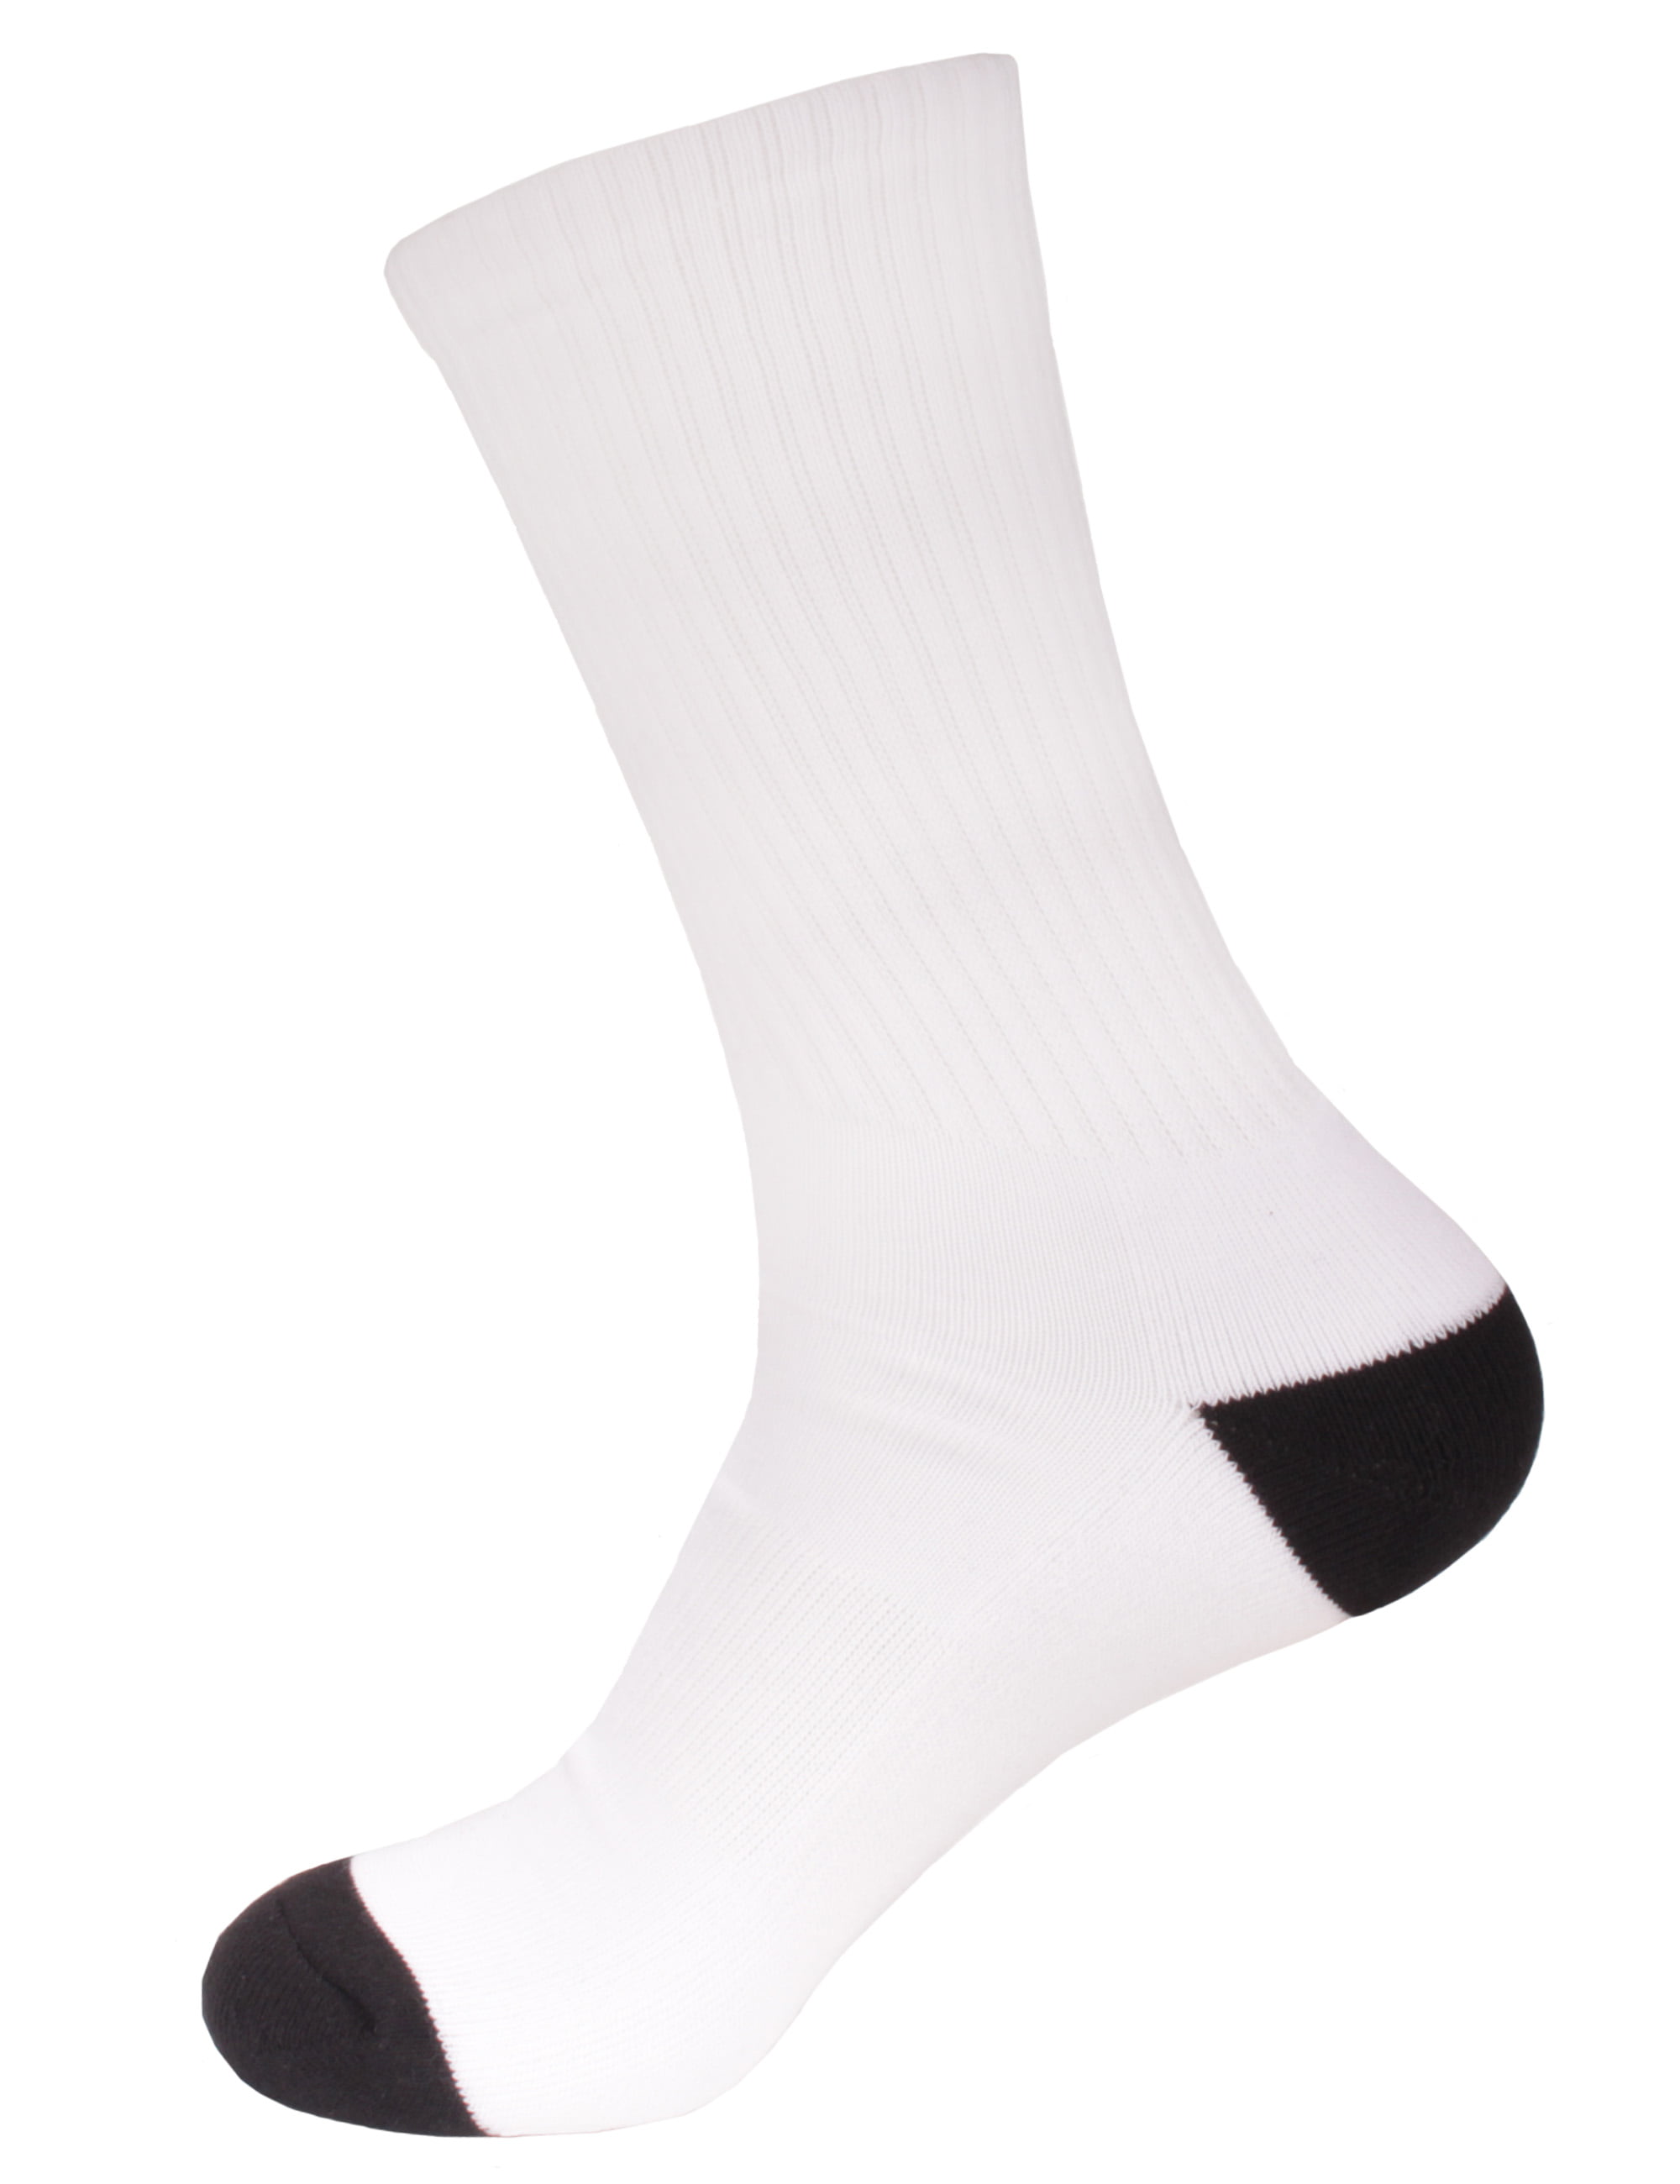 Blank Sublimation Performance Crew Socks - Black Toe and Heel - 25x25cm ...